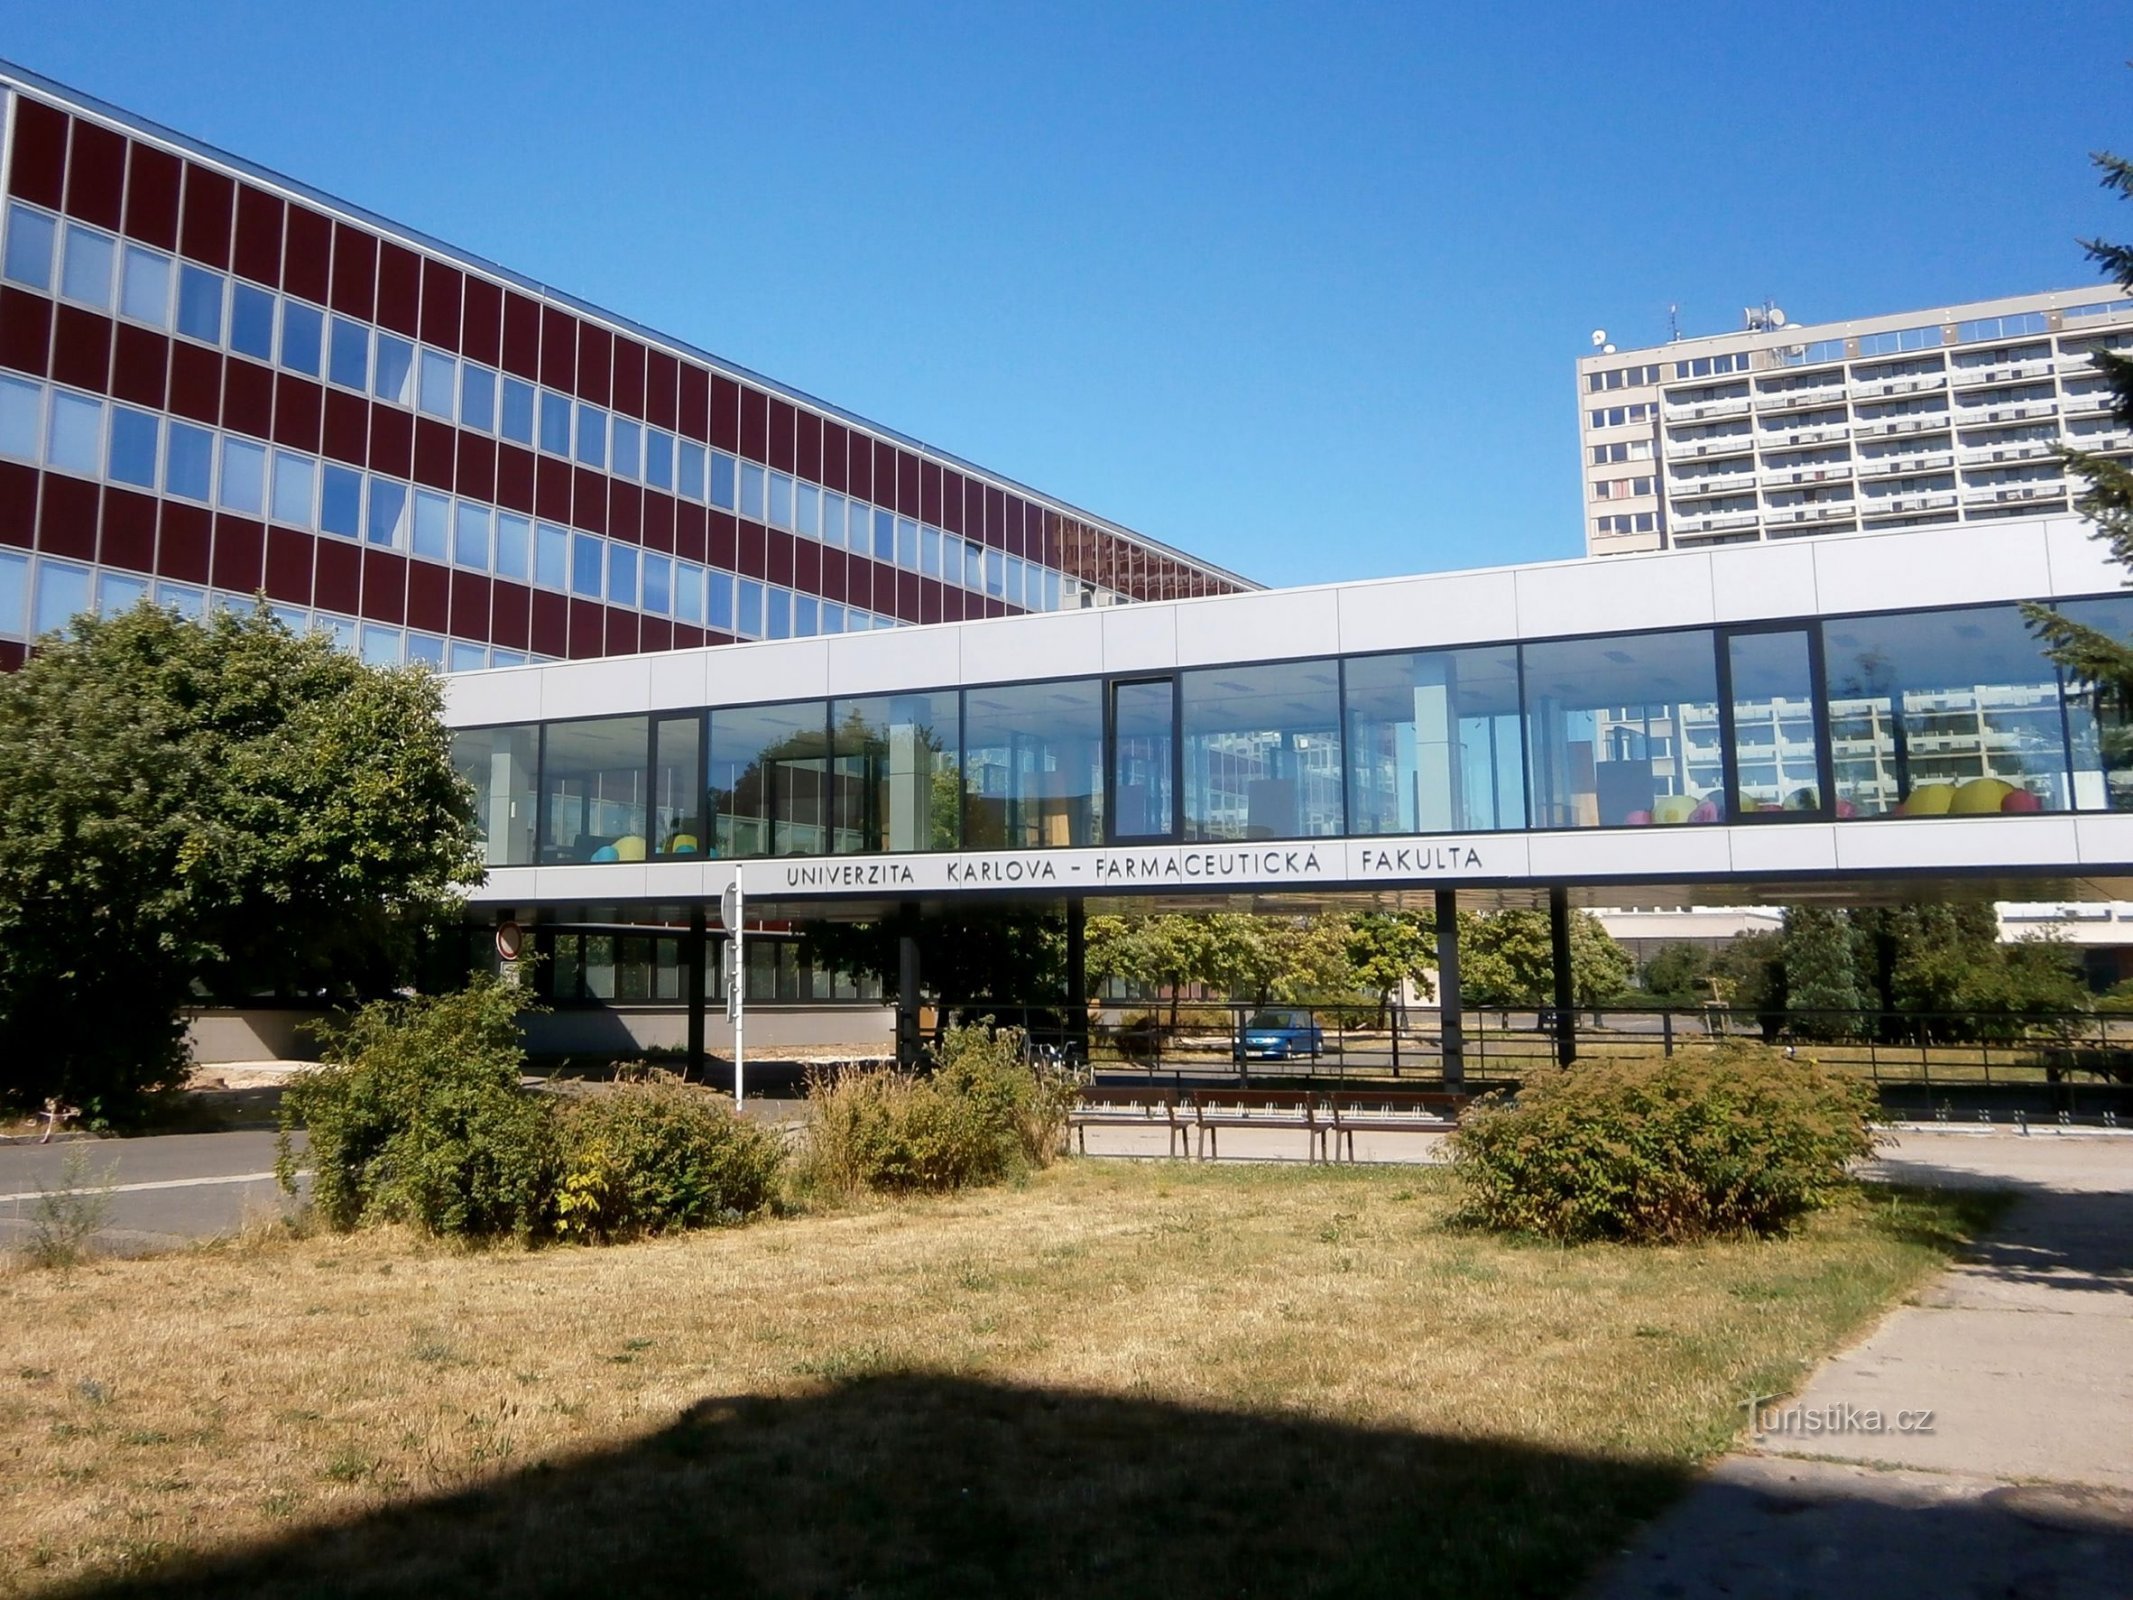 Facoltà di Farmacia, Università Carlo (Hradec Králové, 26.7.2015 giugno XNUMX)